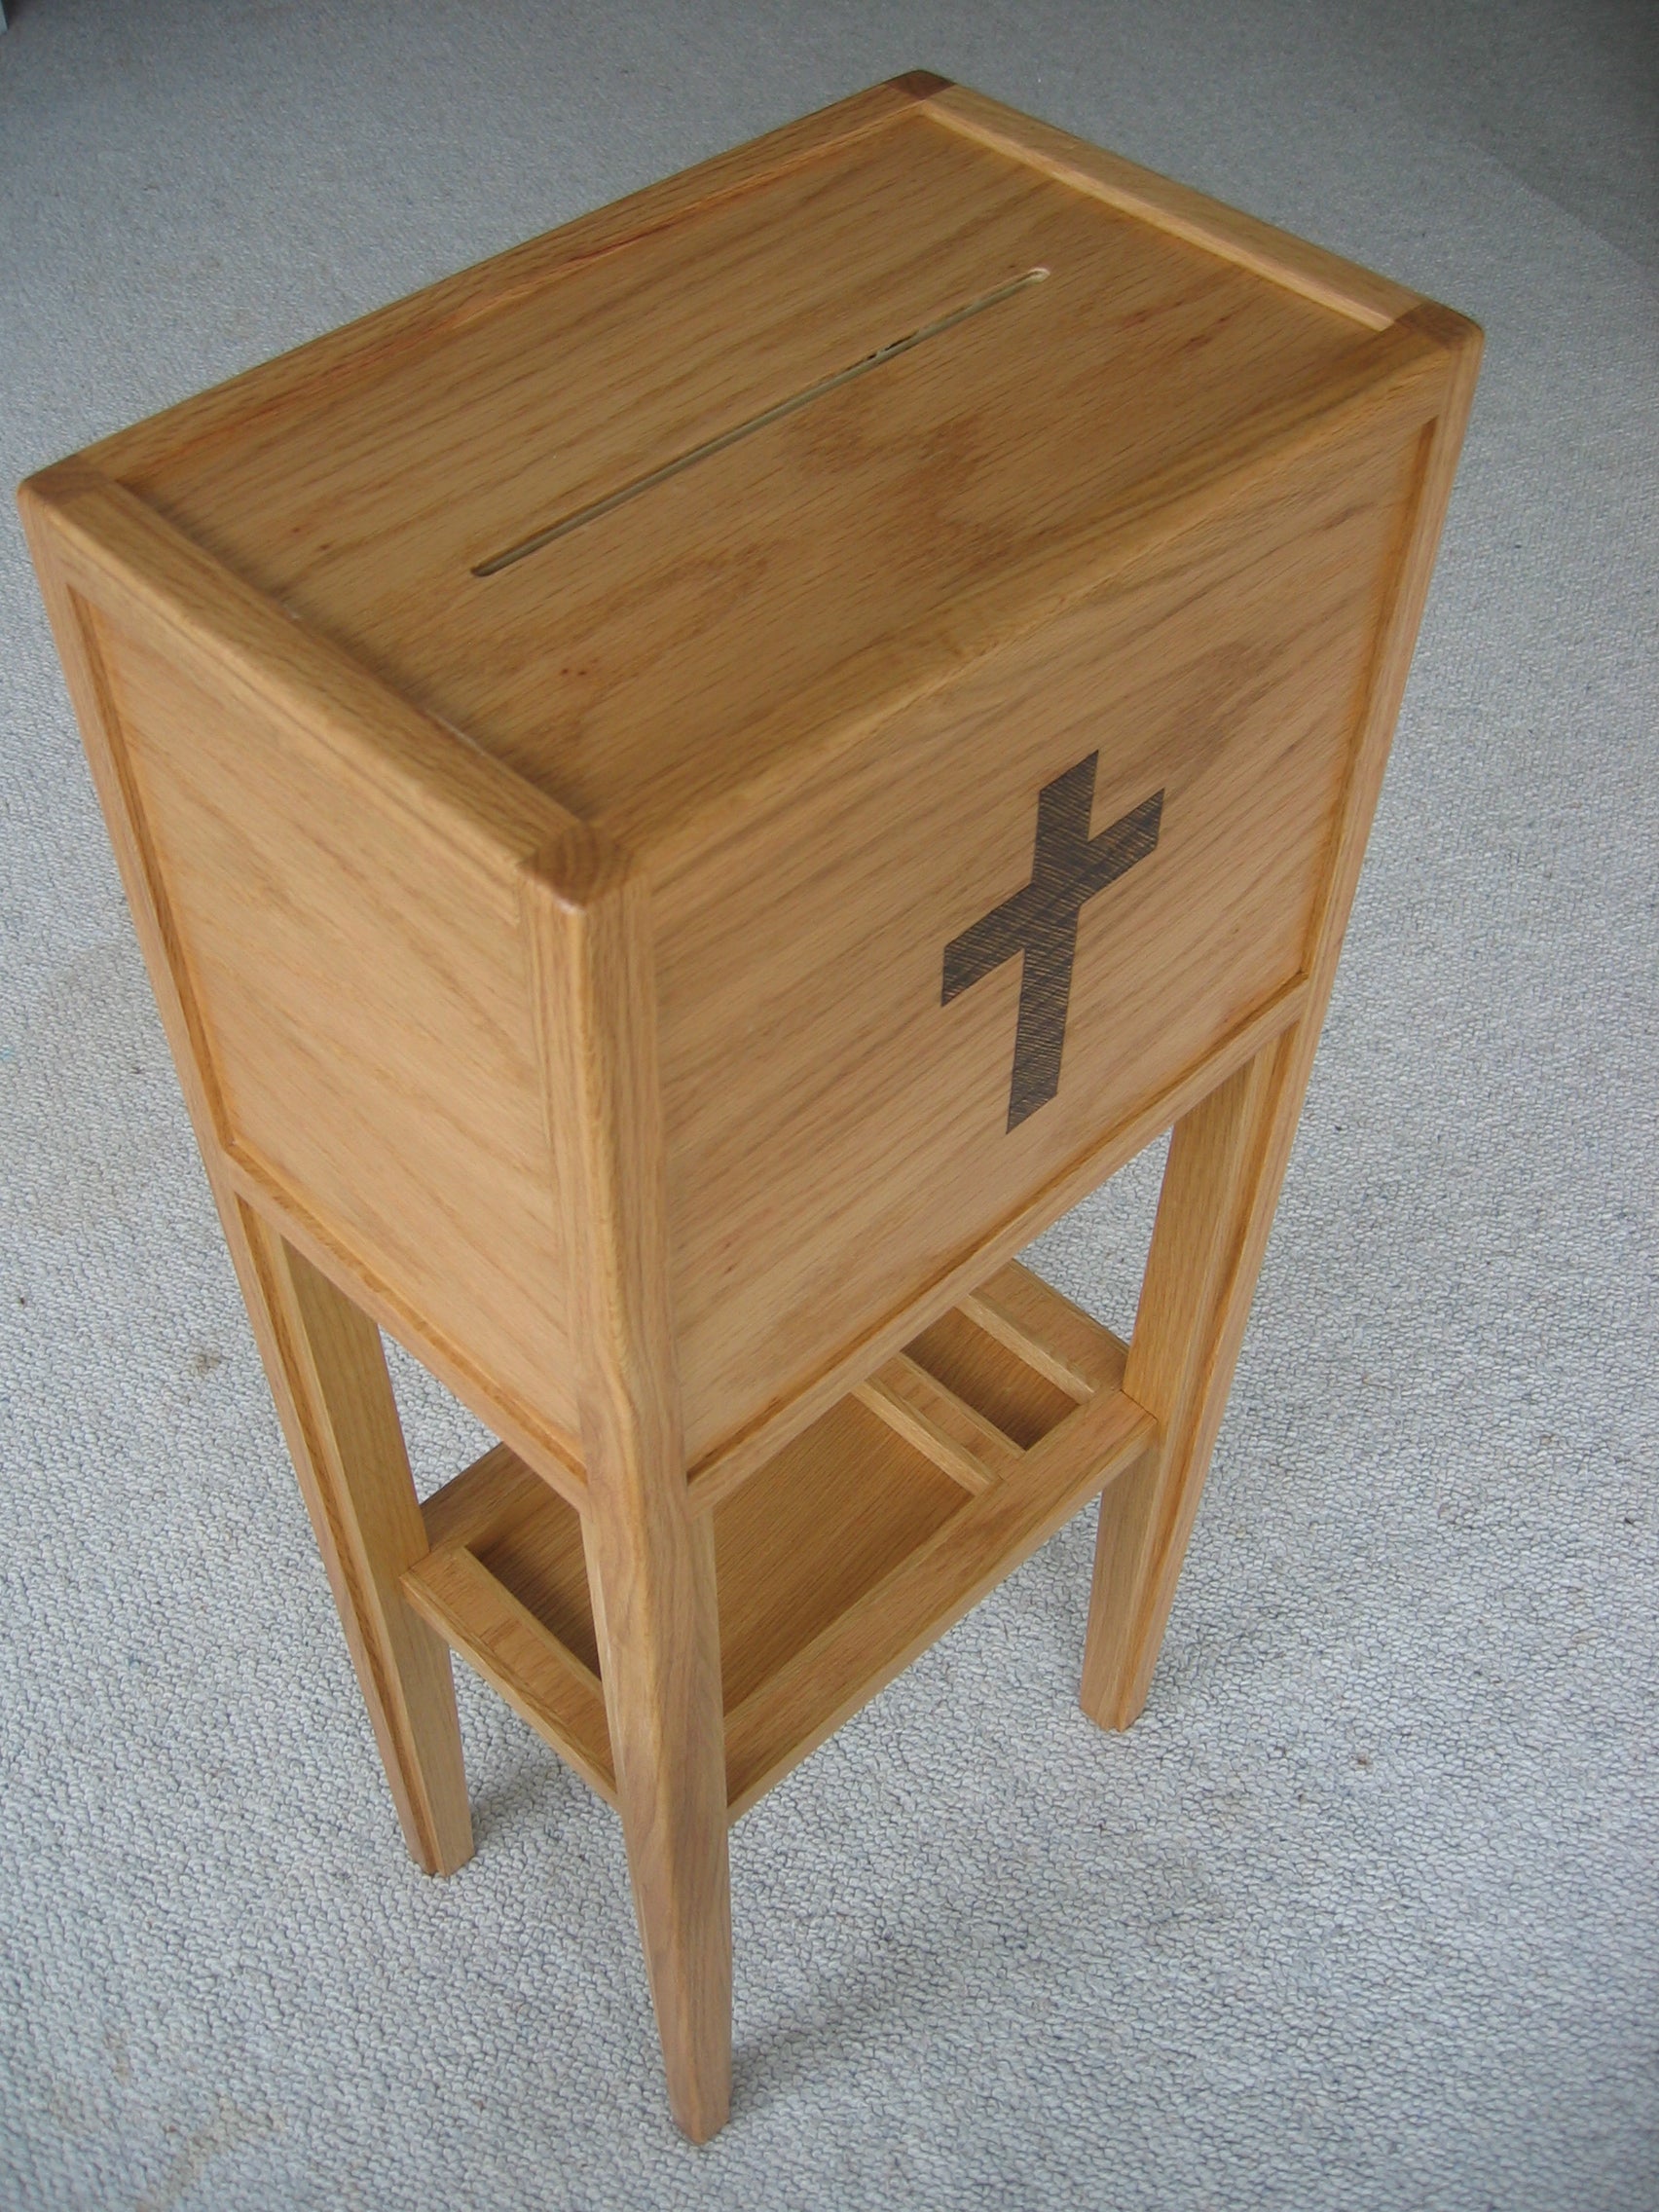 Wooden Prayer box with stand - TreeToBox